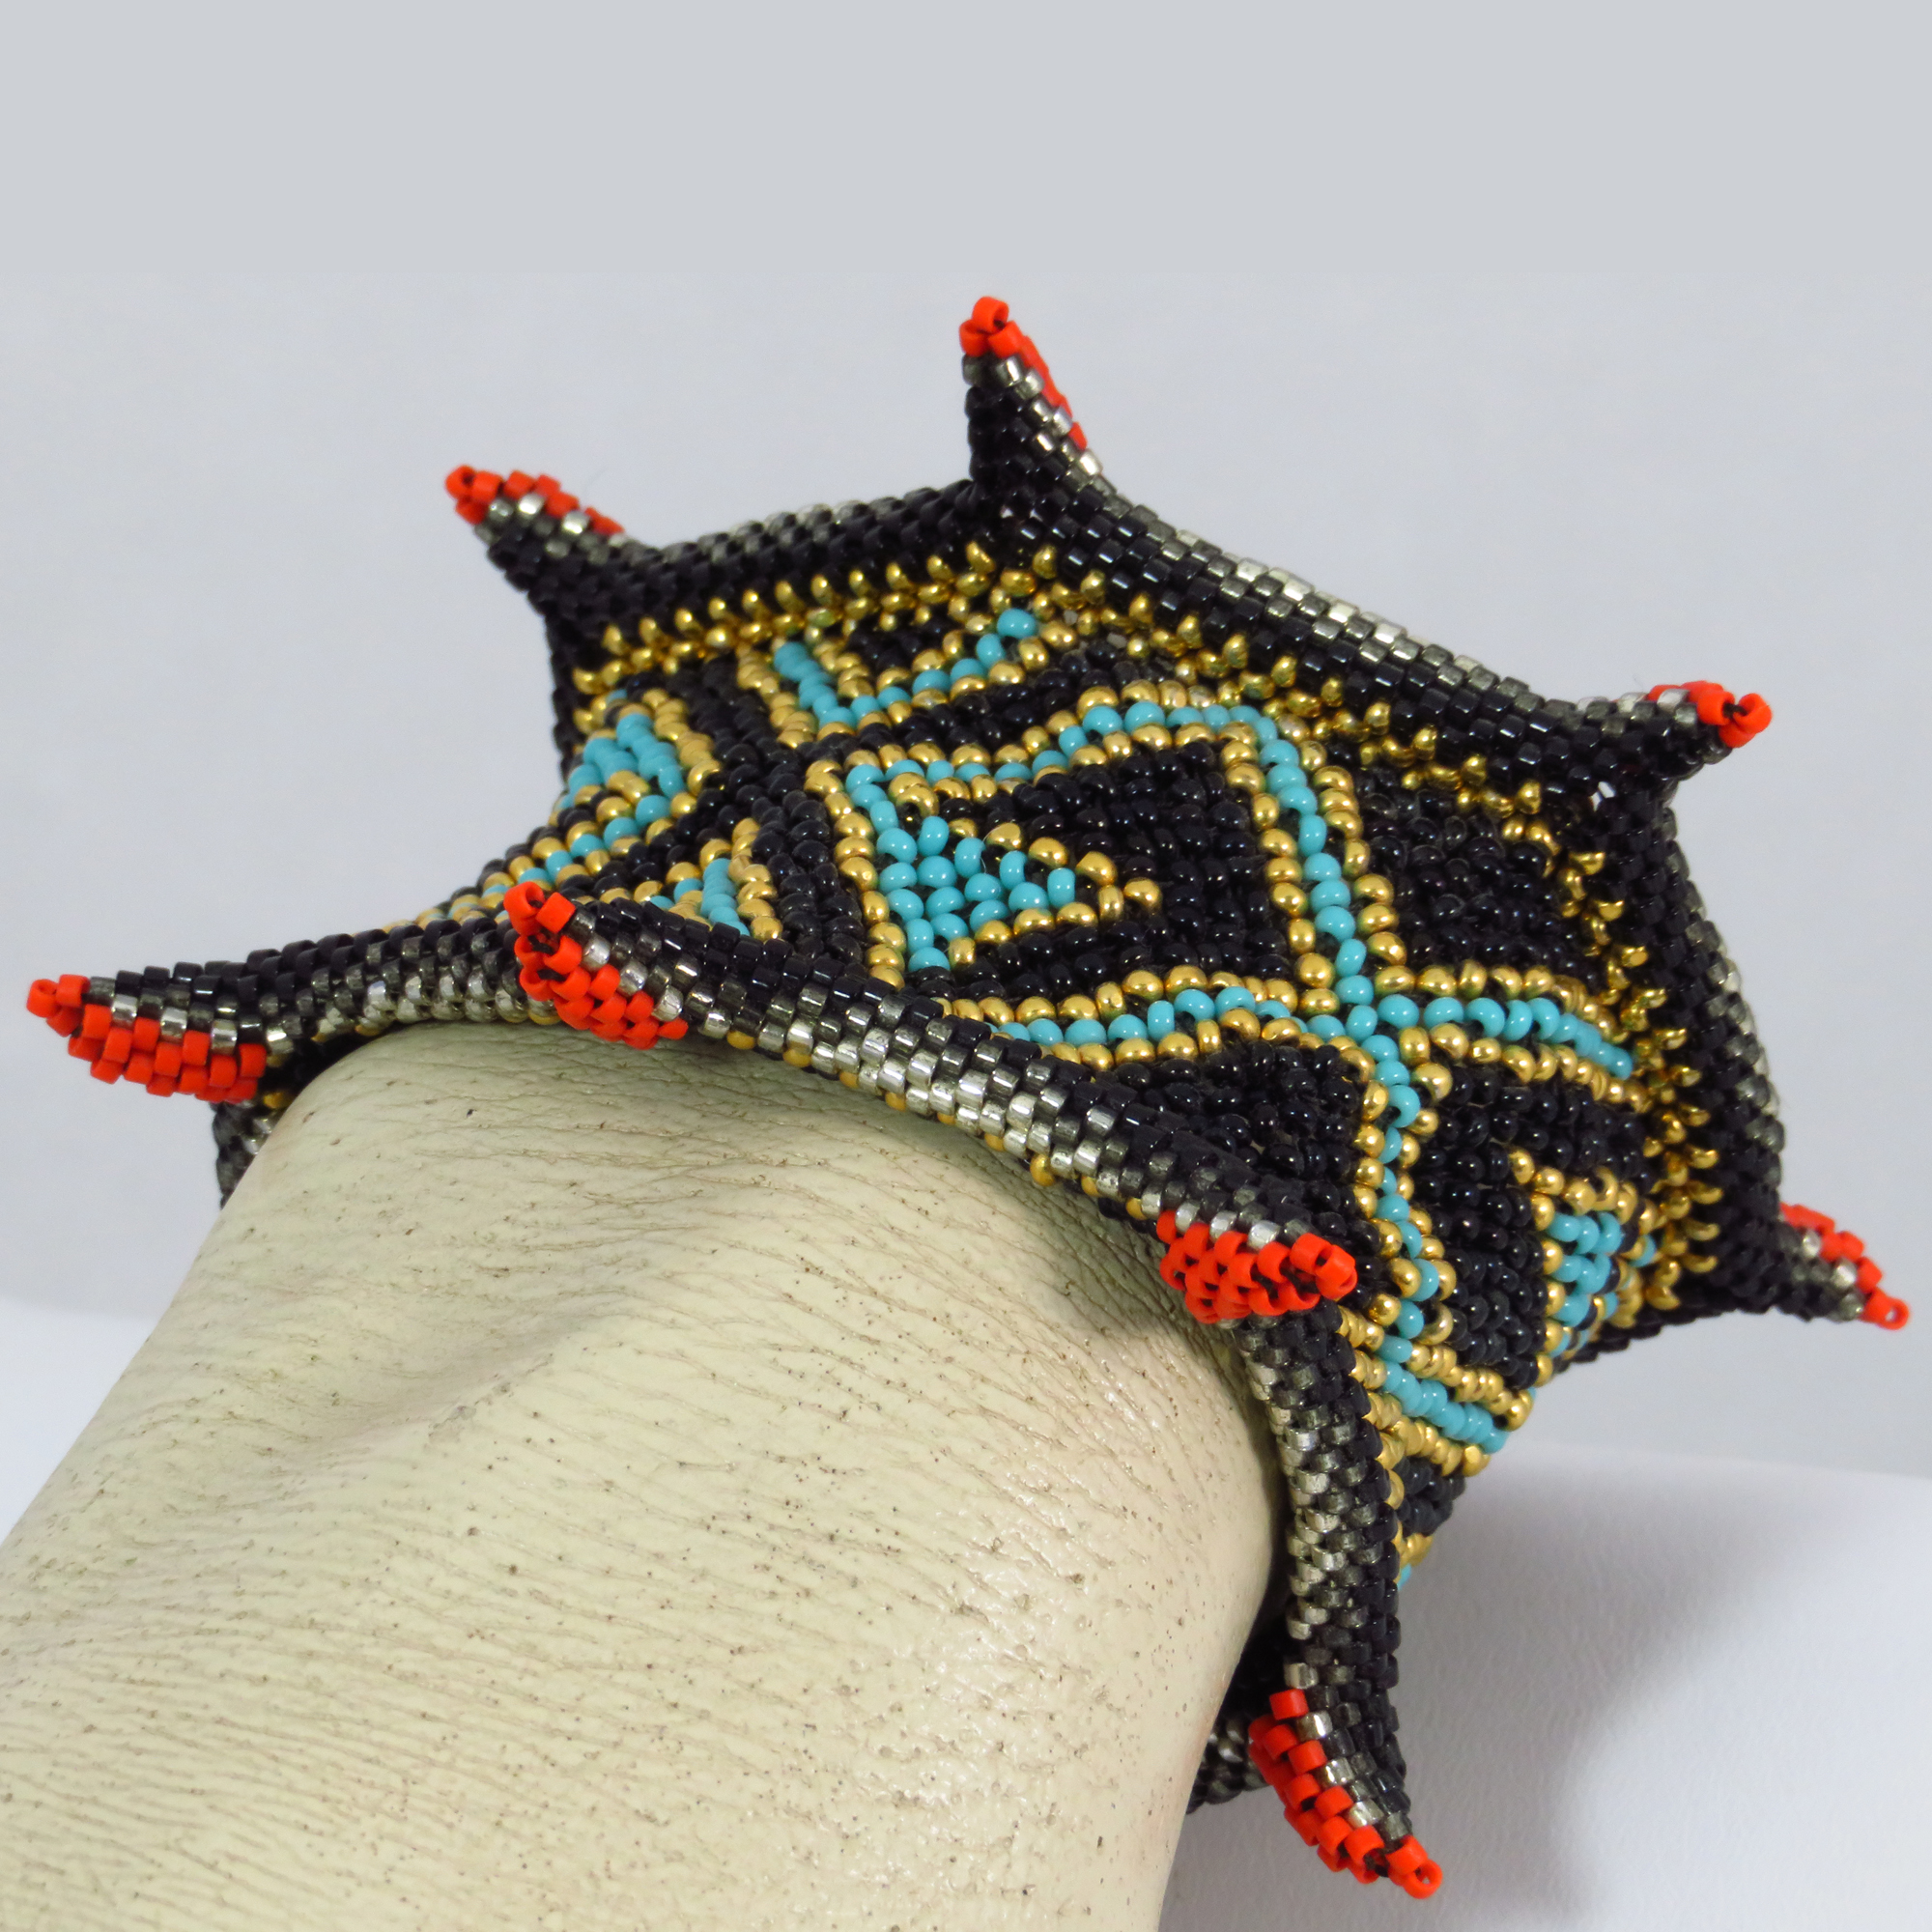 Geometric spirals patterned cuff bracelet by Bonnie Van Hall